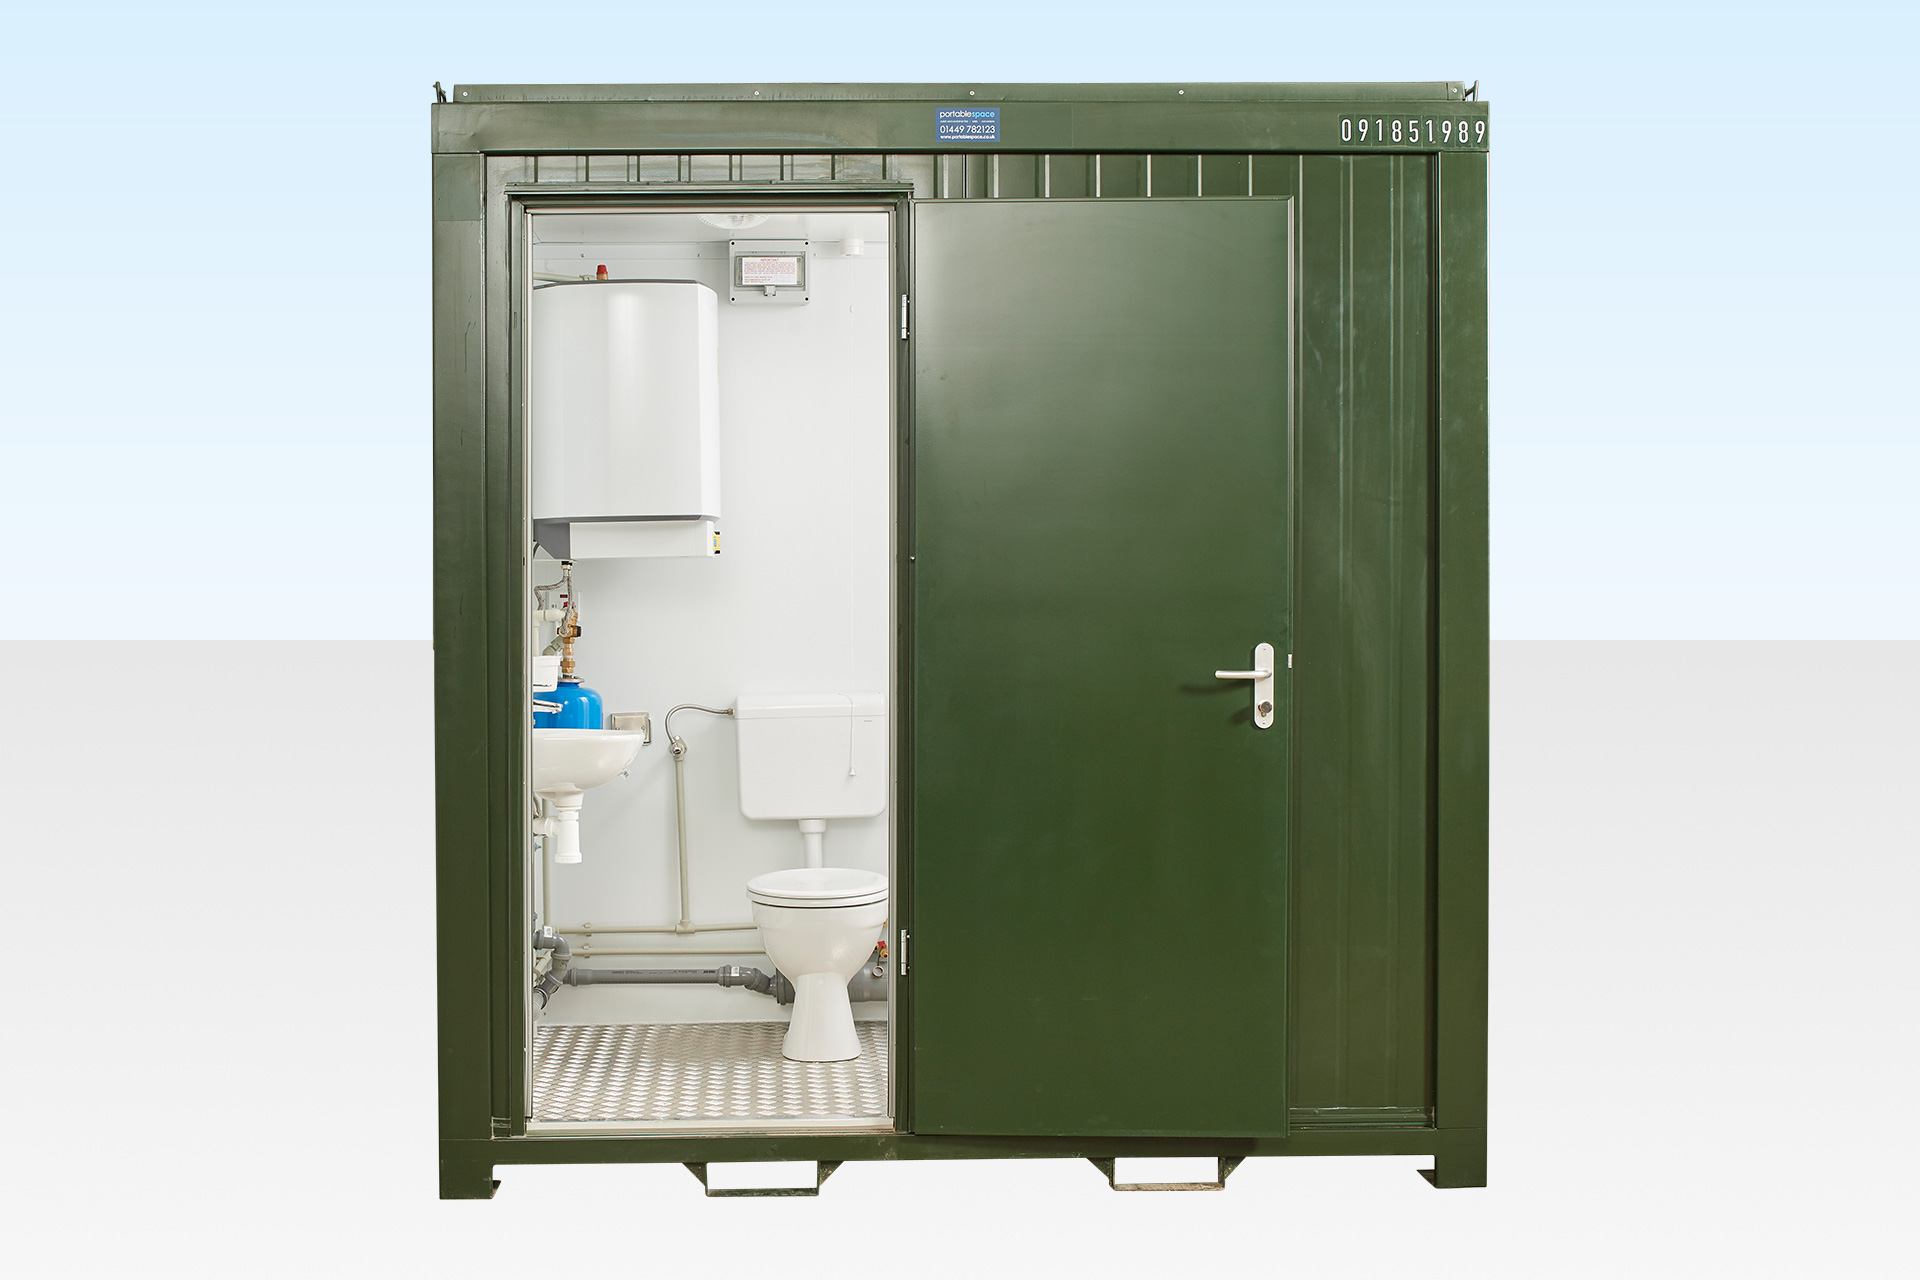 https://www.portablespace.co.uk/wp-content/uploads/2018/08/712-Contanx-Shower-Toilet-Shower-inside.jpg